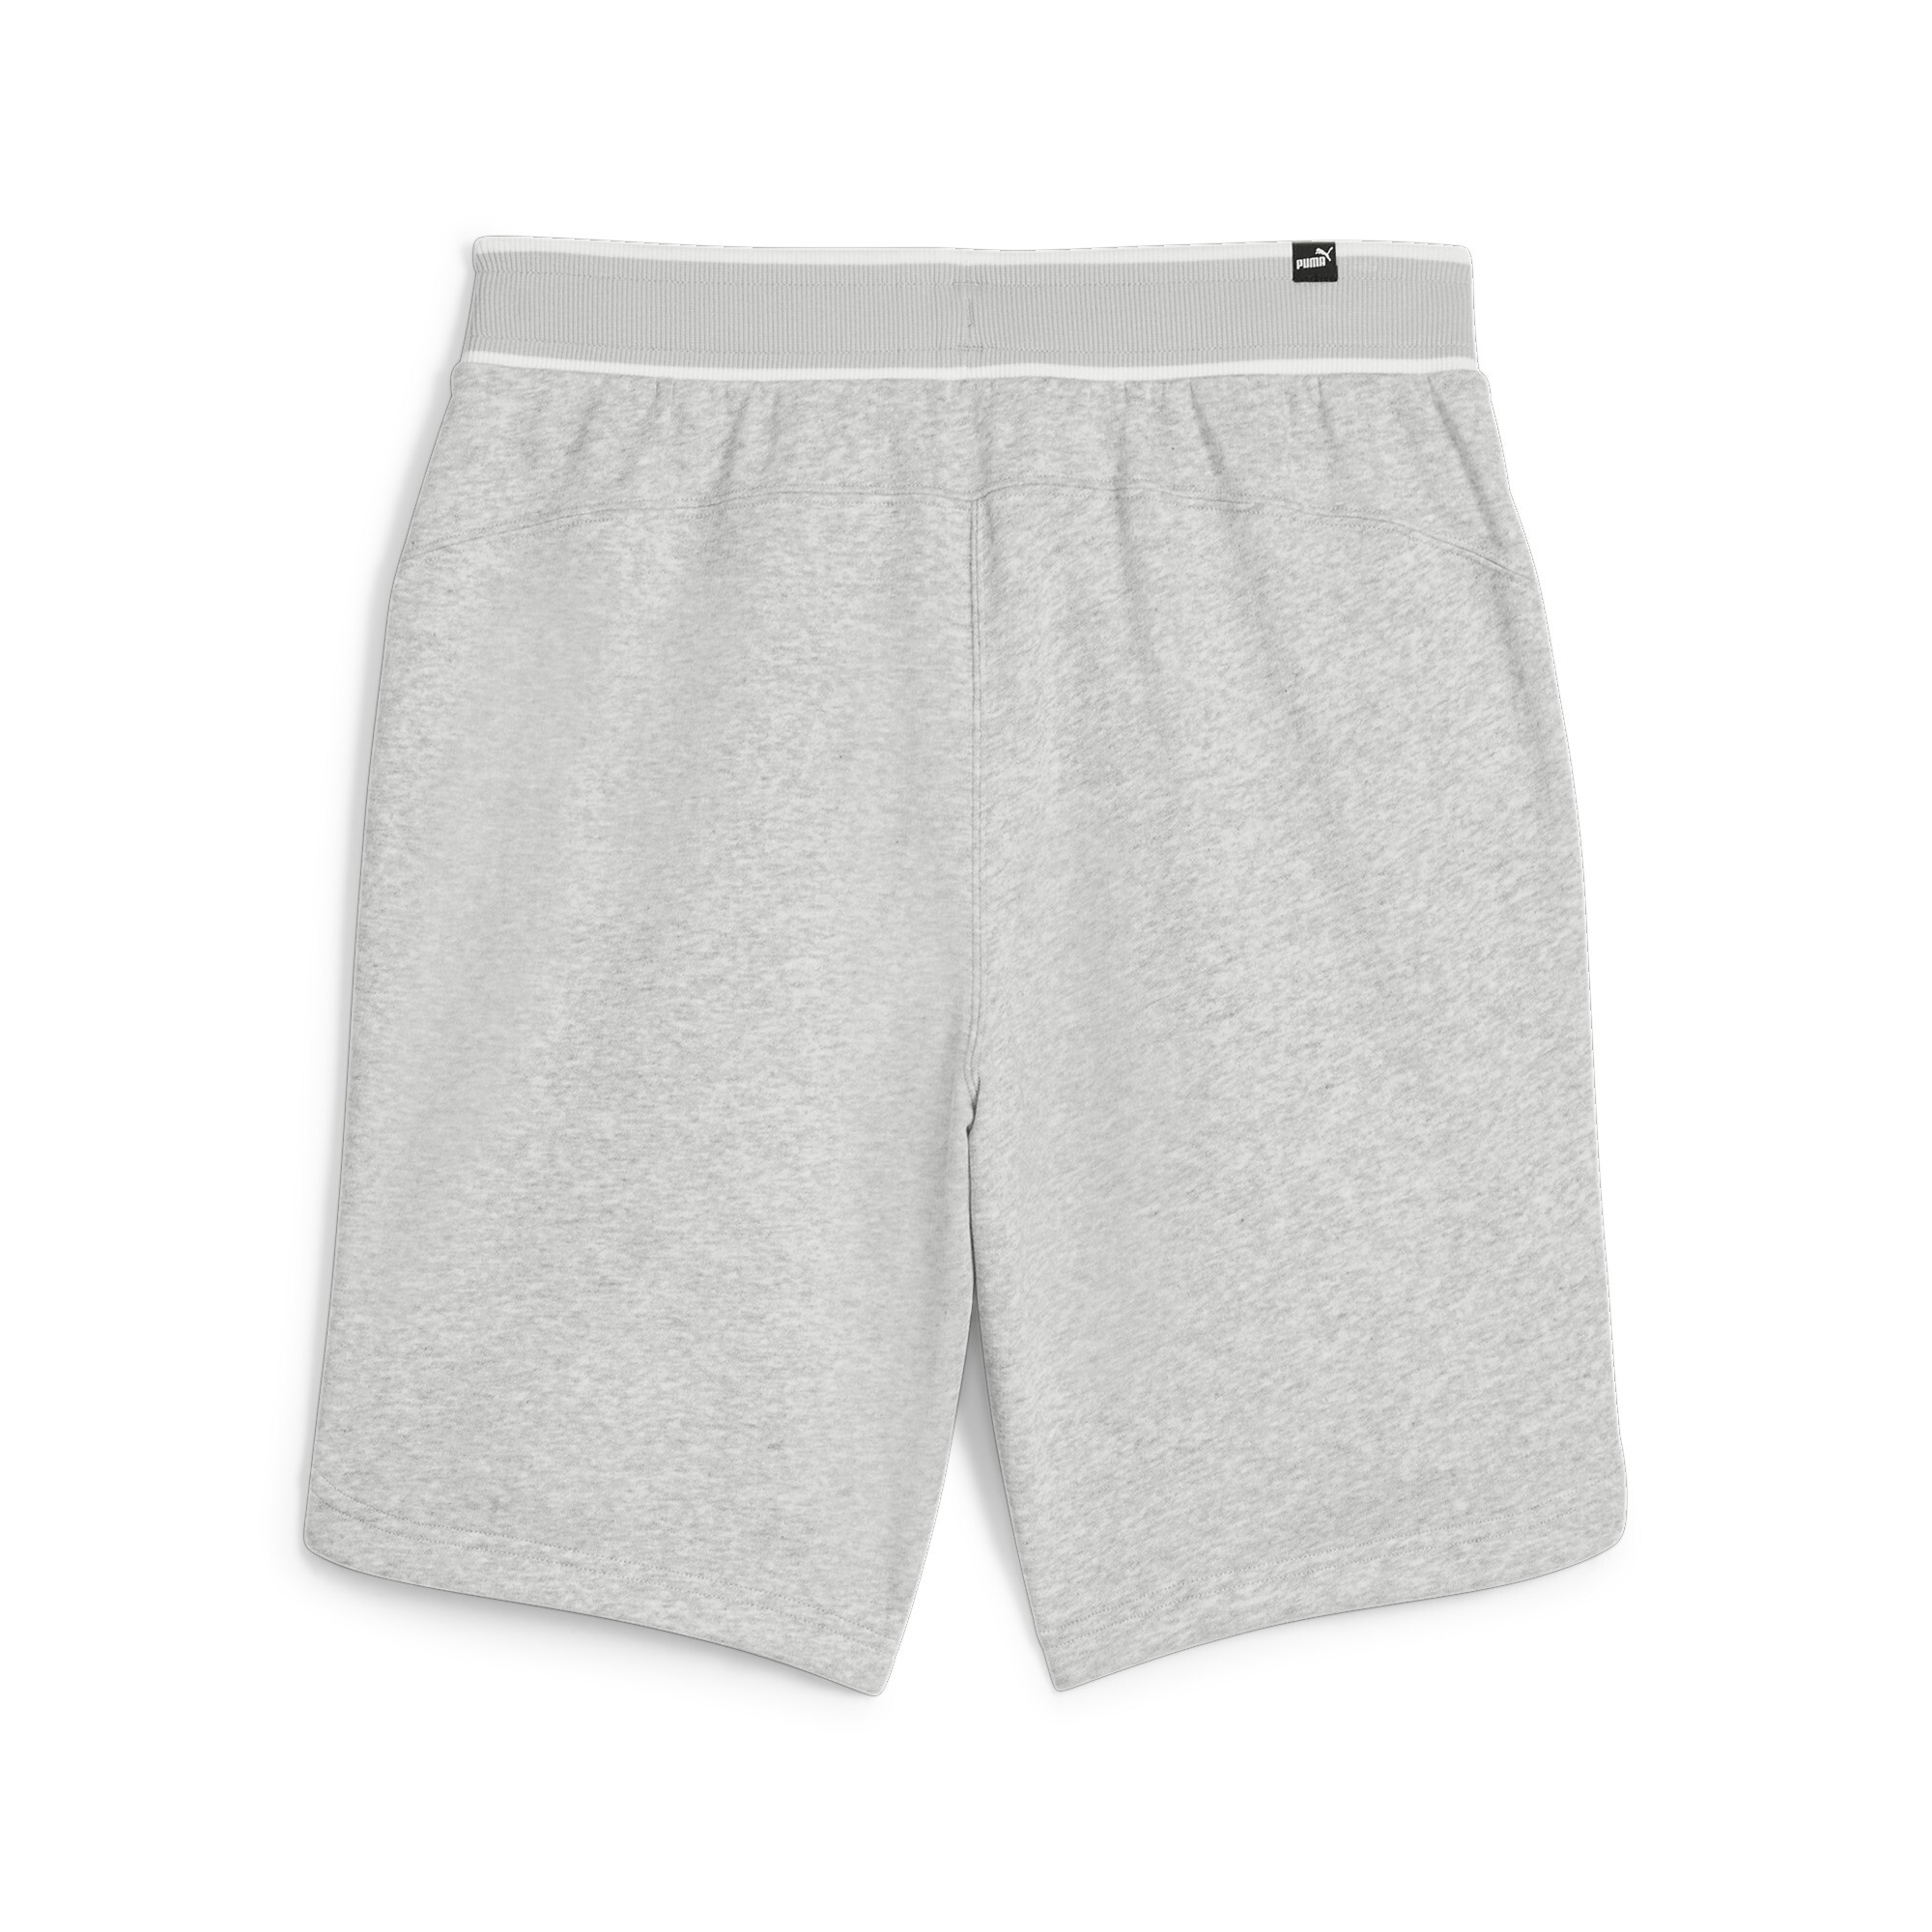 Men's Puma SQUAD Shorts, Gray, Size XXL, Clothing